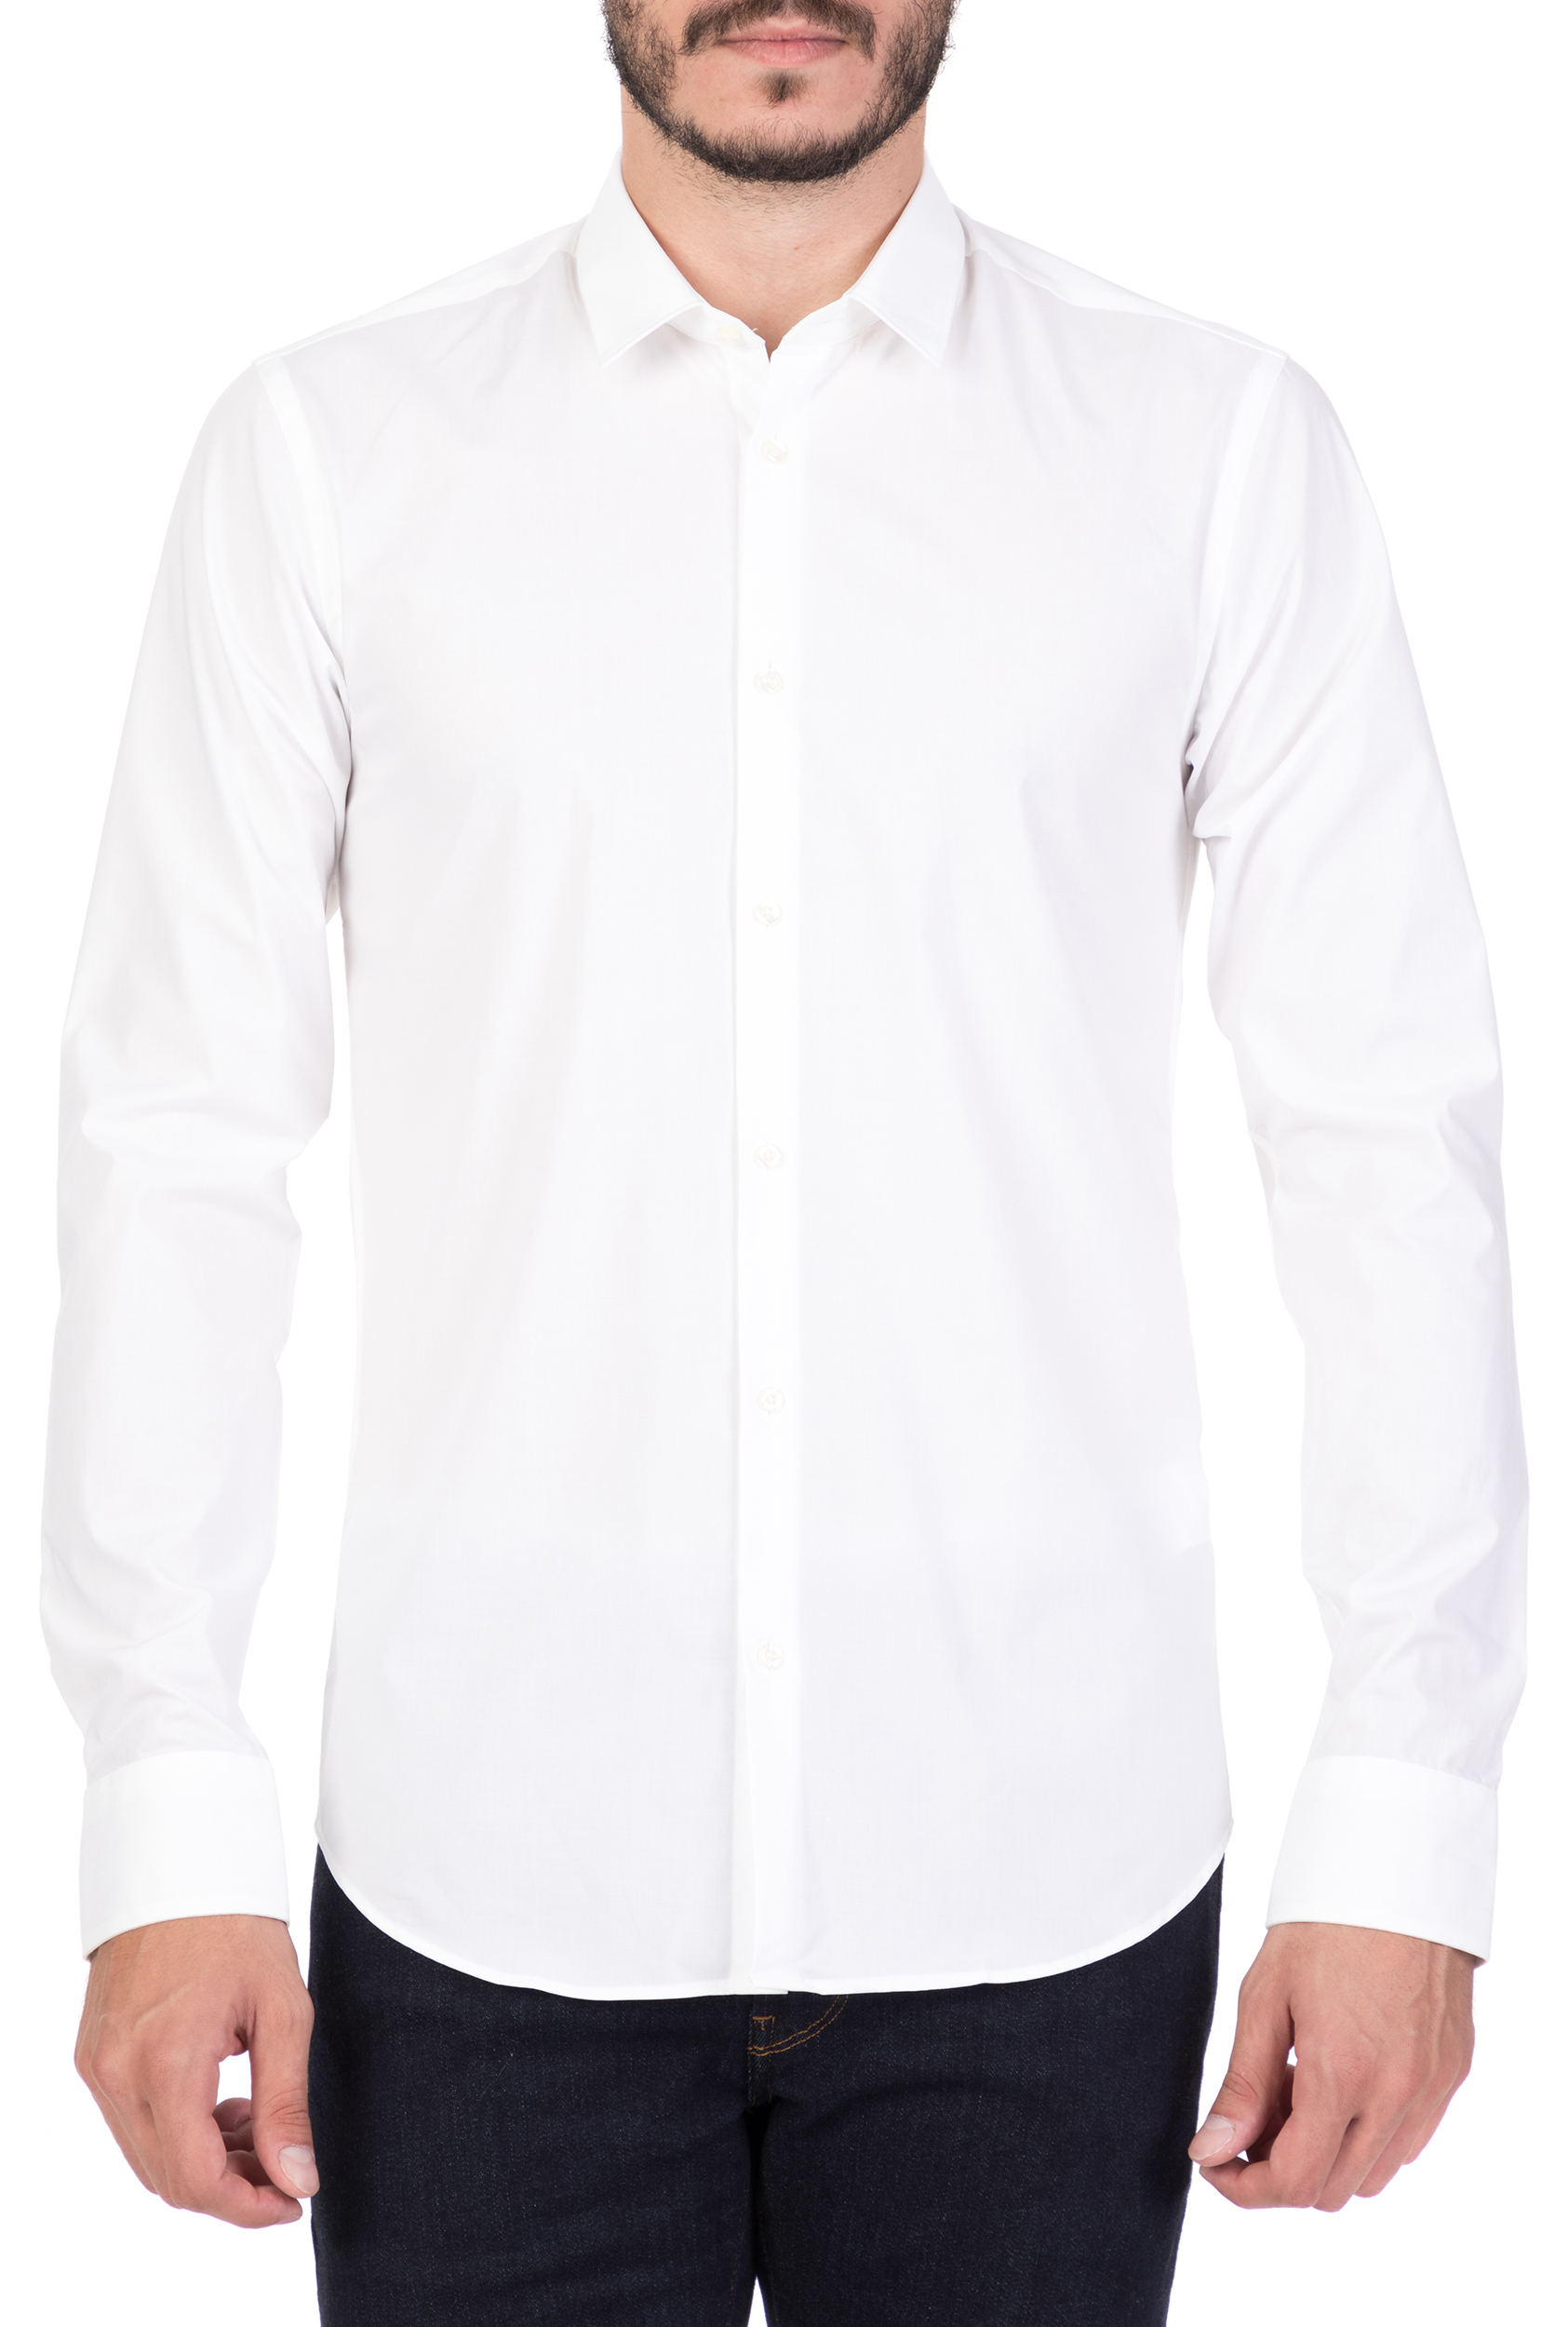 SCOTCH & SODA SCOTCH & SODA - Ανδρικό μακρυμάνικο πουκάμισο SCOTCH & SODA λευκό